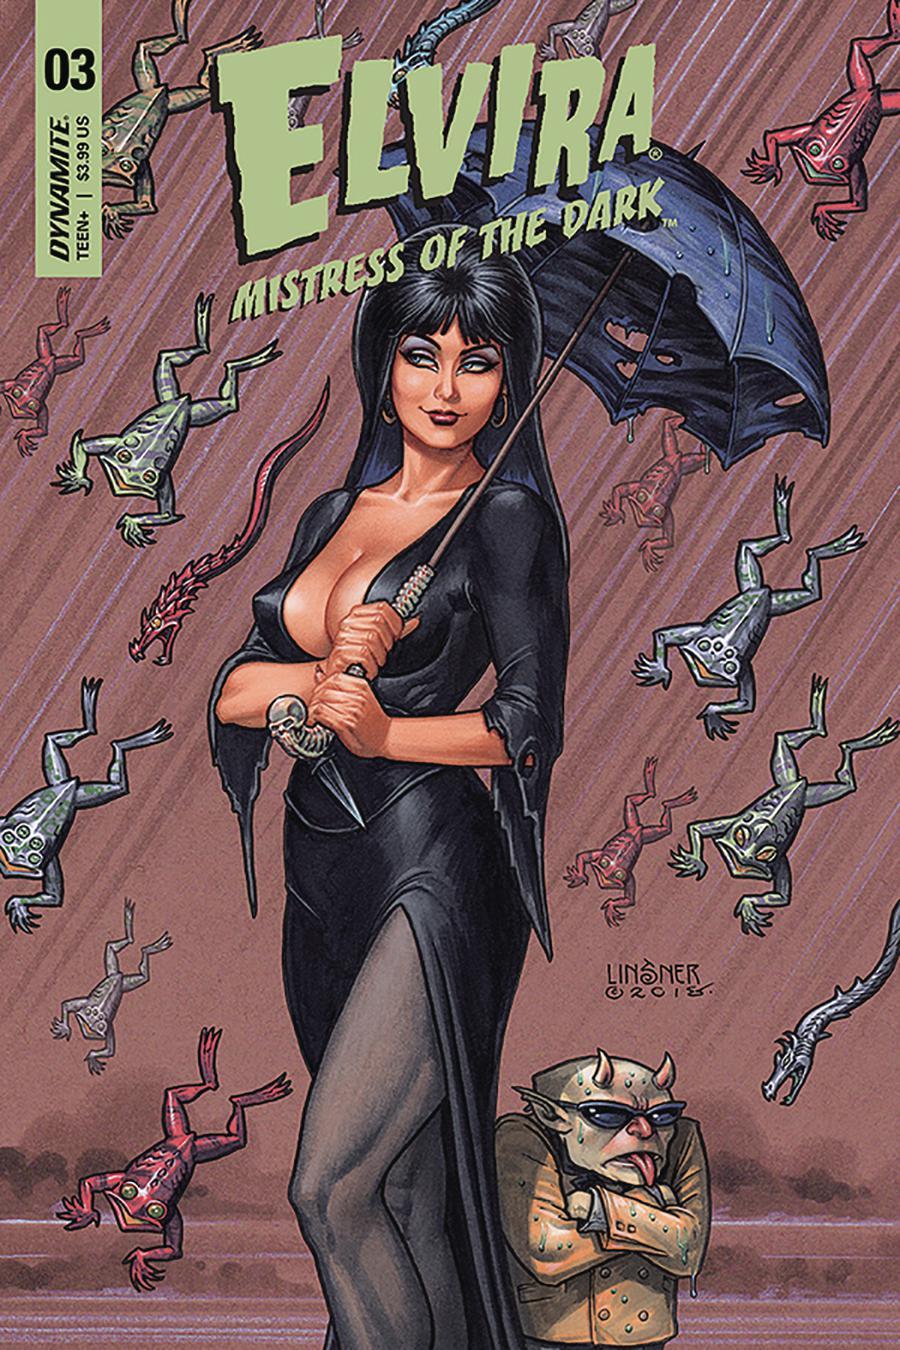 Elvira Mistress Of The Dark Vol. 2 #3